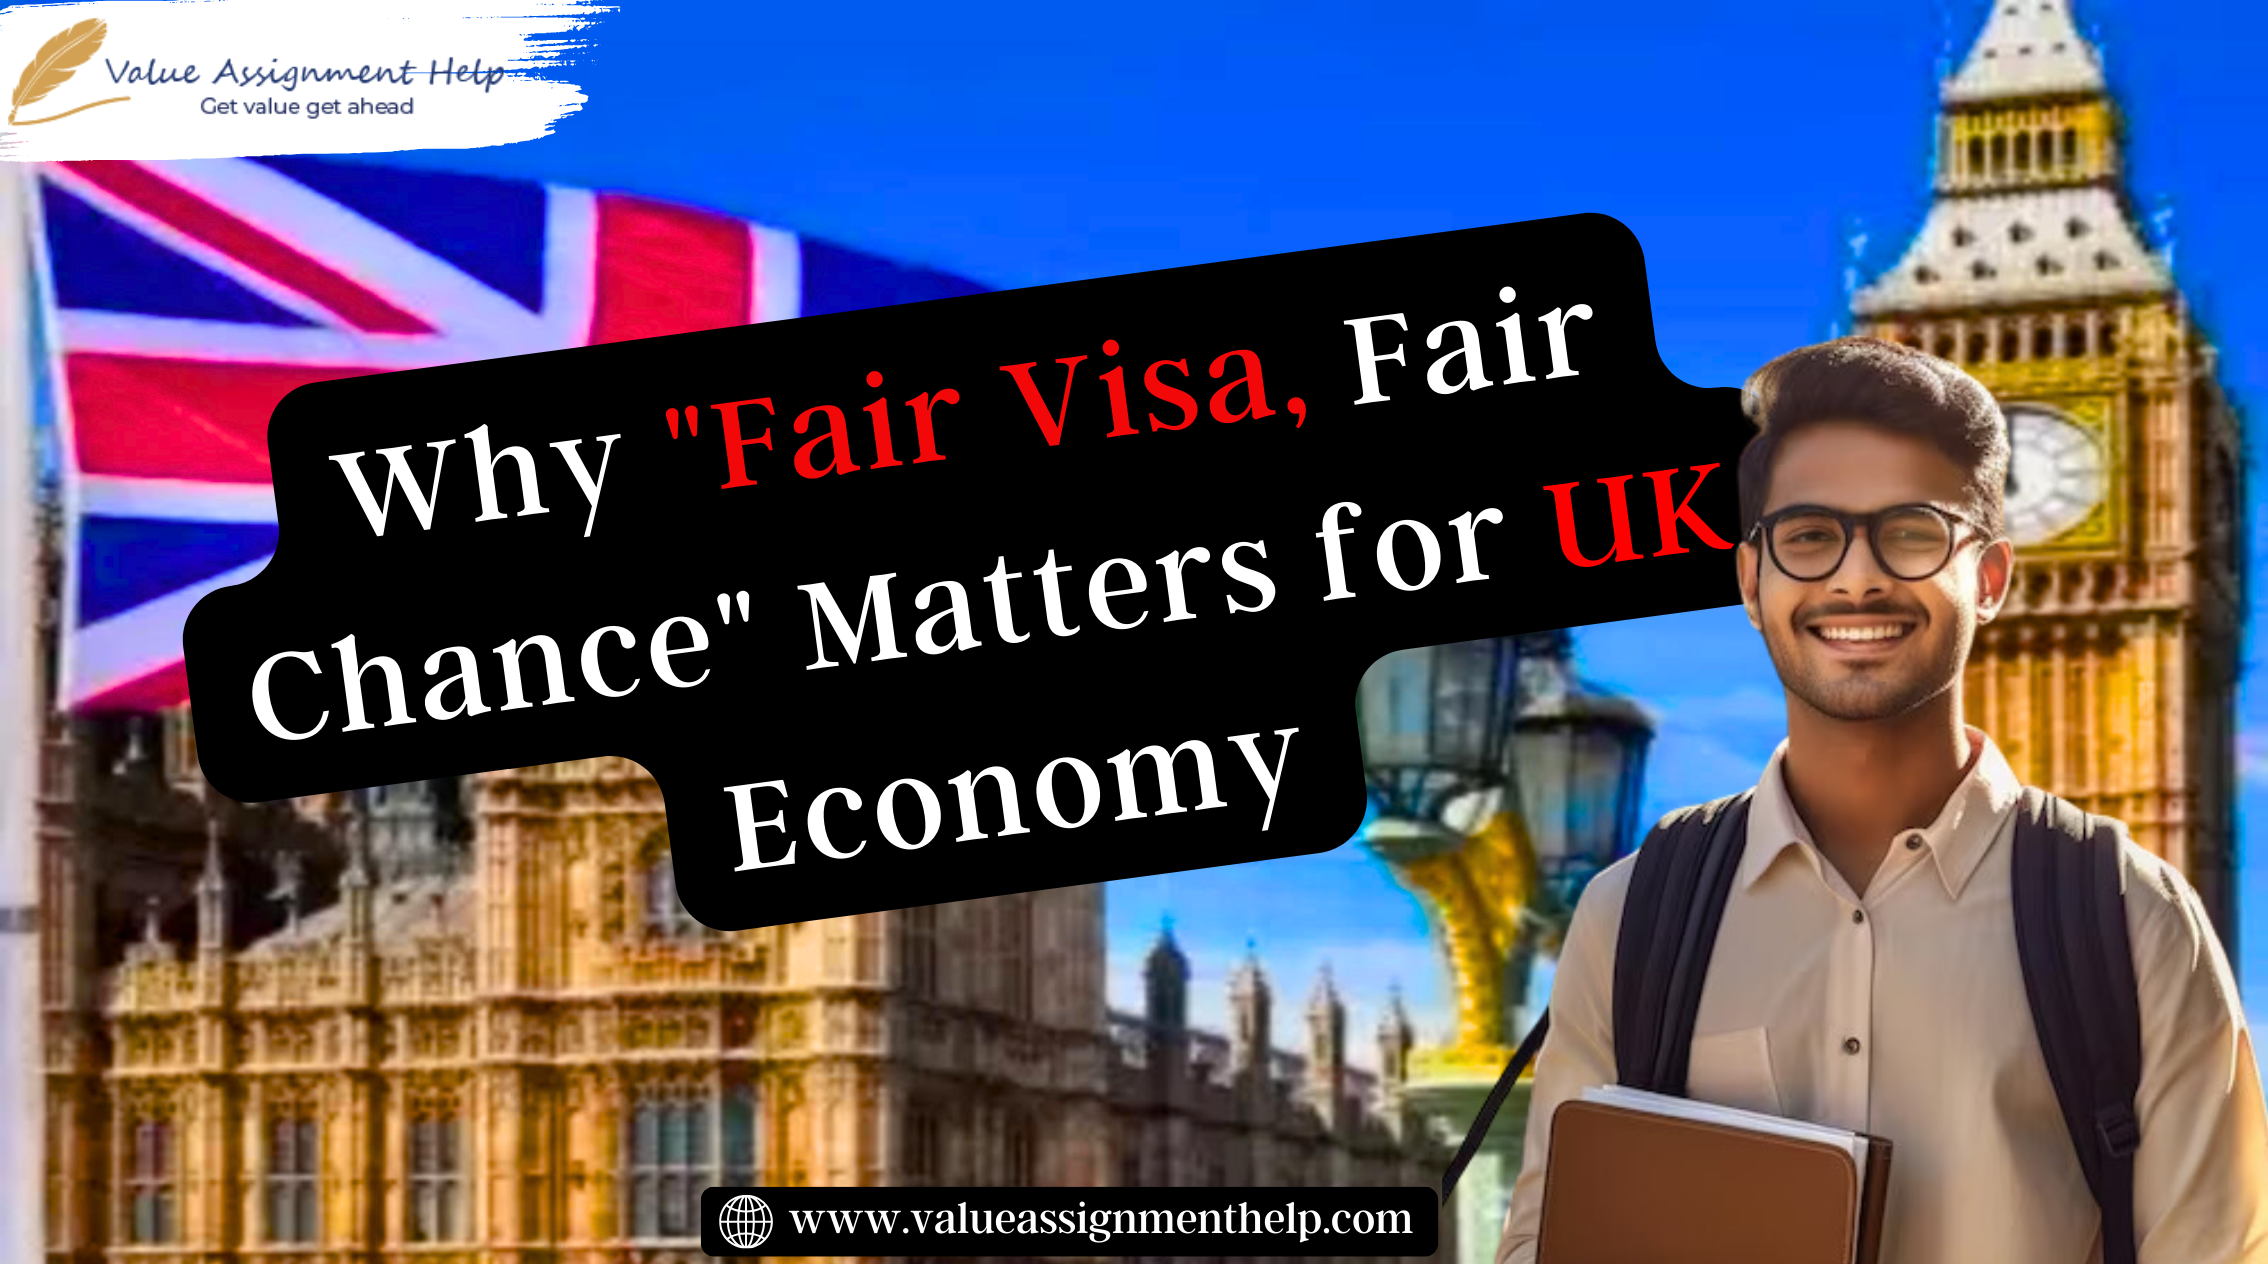  Why "Fair Visa, Fair Chance" Matters for UK Economy